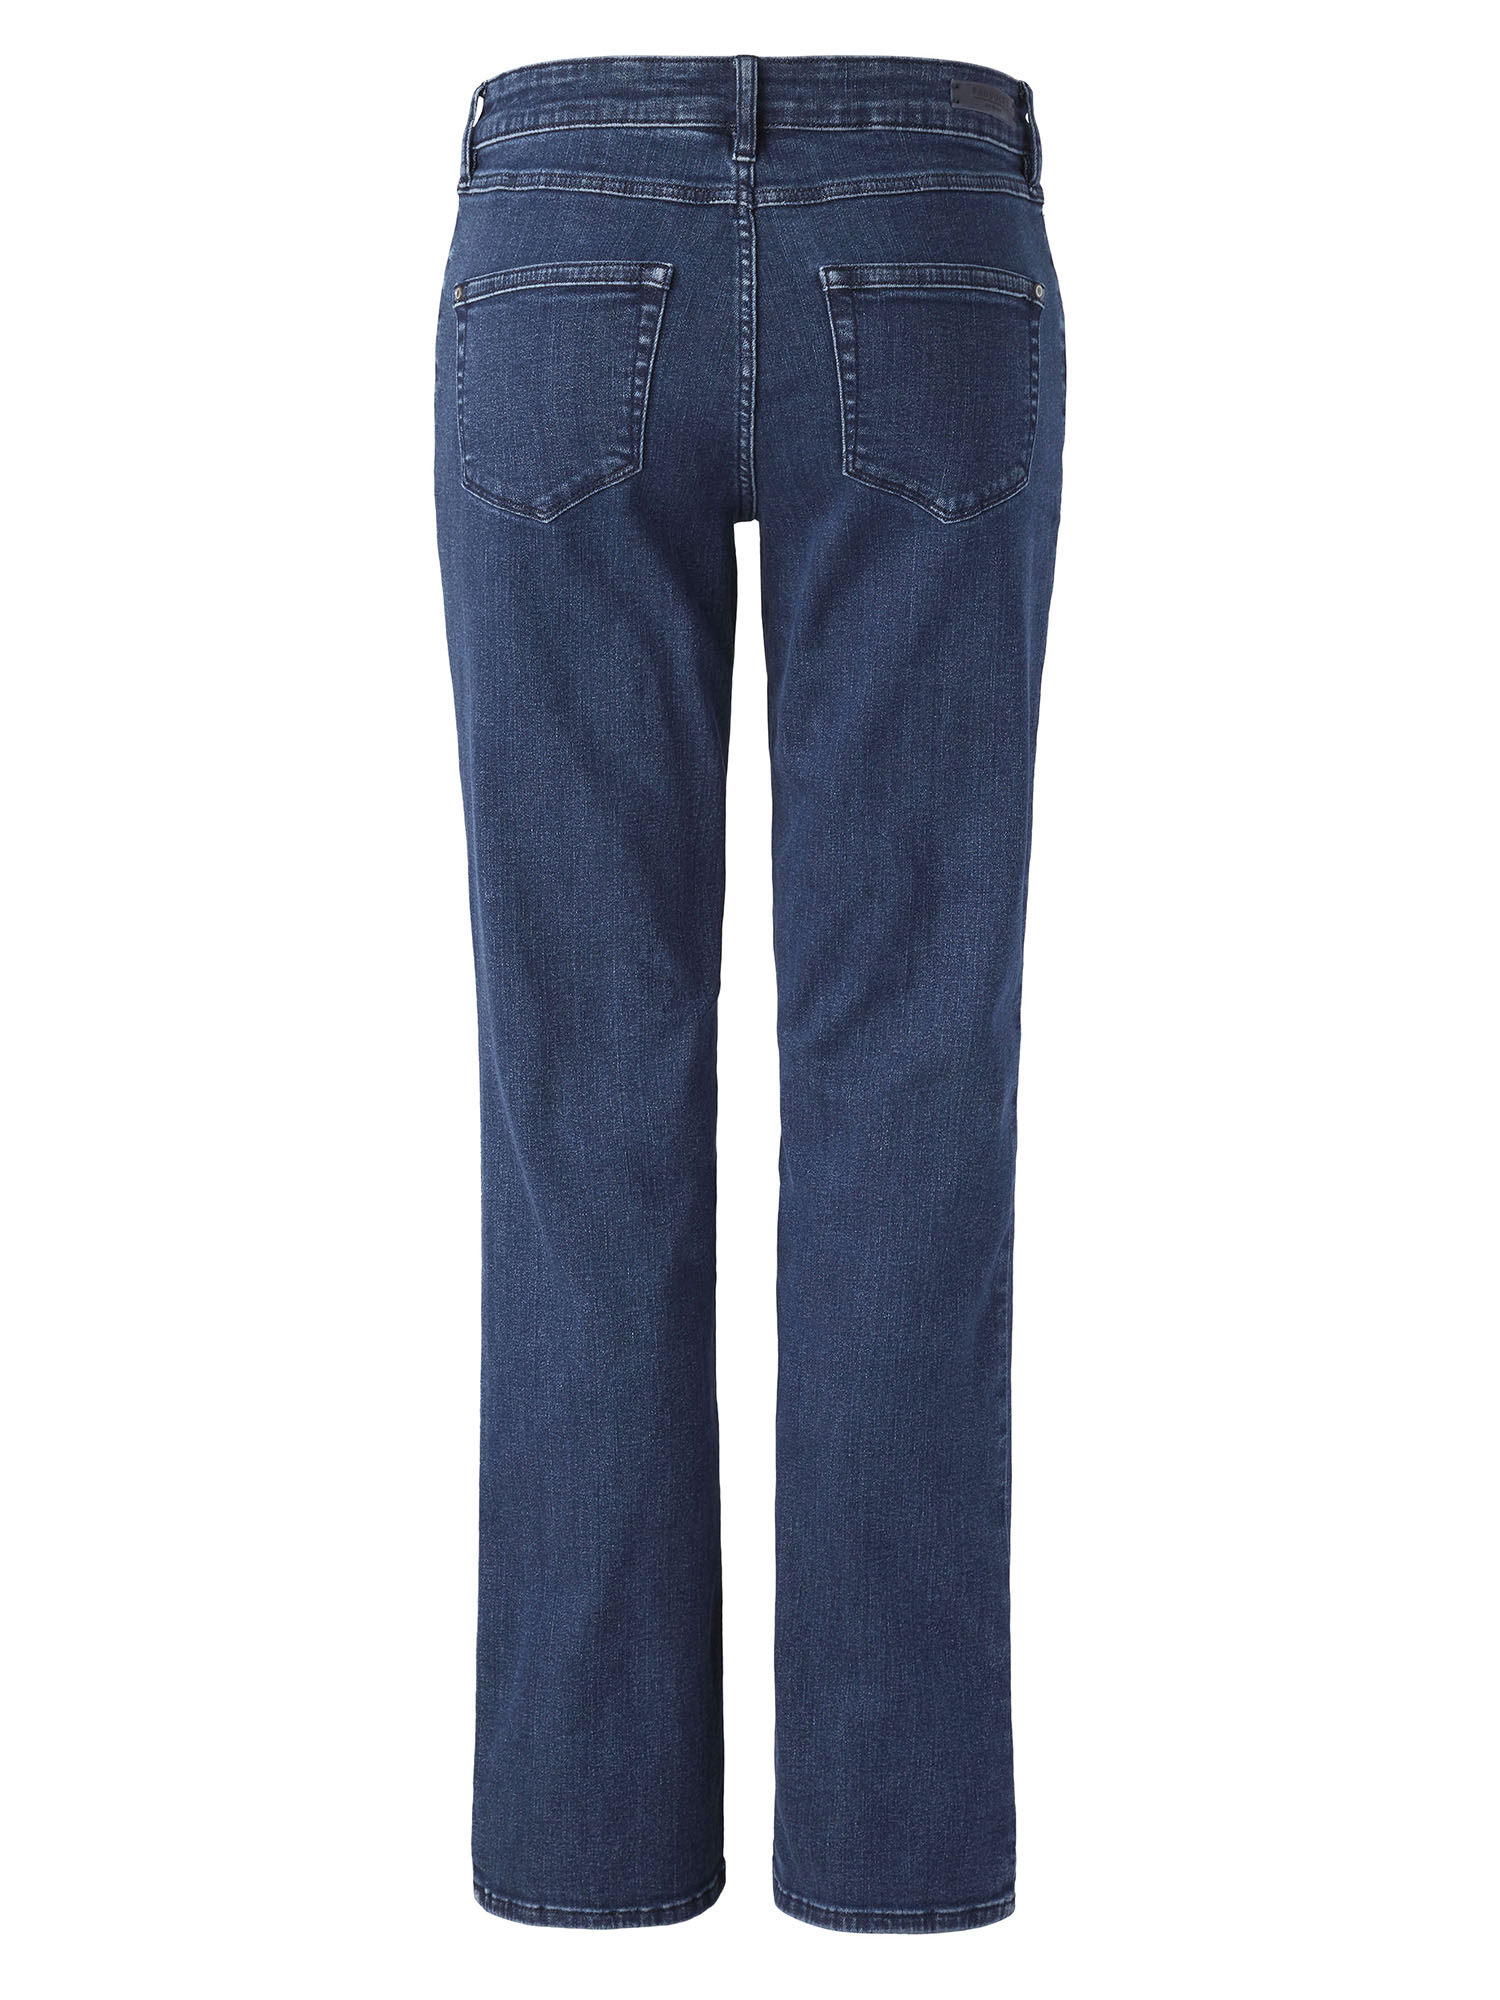 605417138000-4401_damen-straight-fit-denim-jeans-lara-paddocks_2.jpg